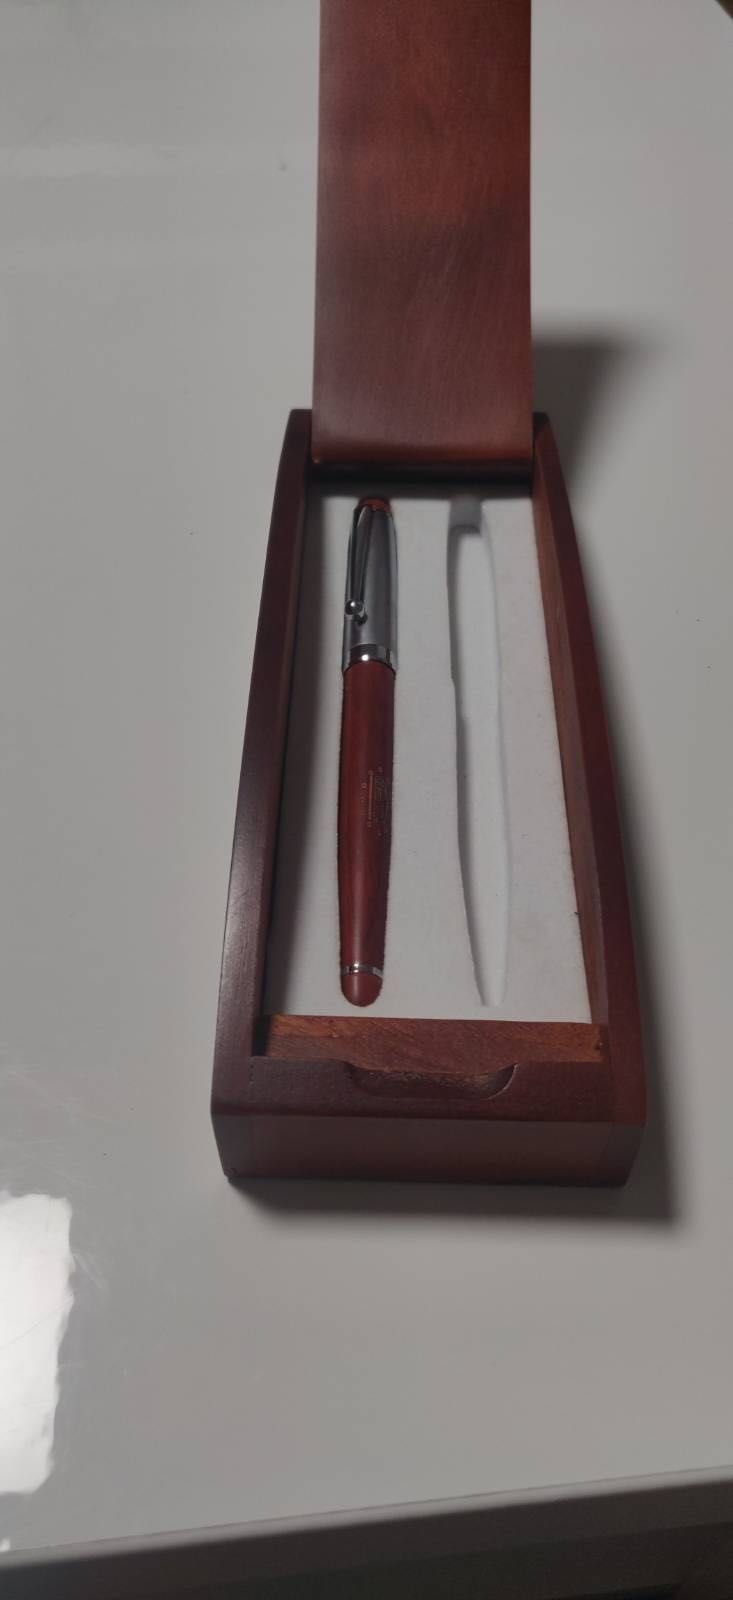 Clean Vita Caneta de tinteiro / Fountain Pen com caixa madeira - NOVO